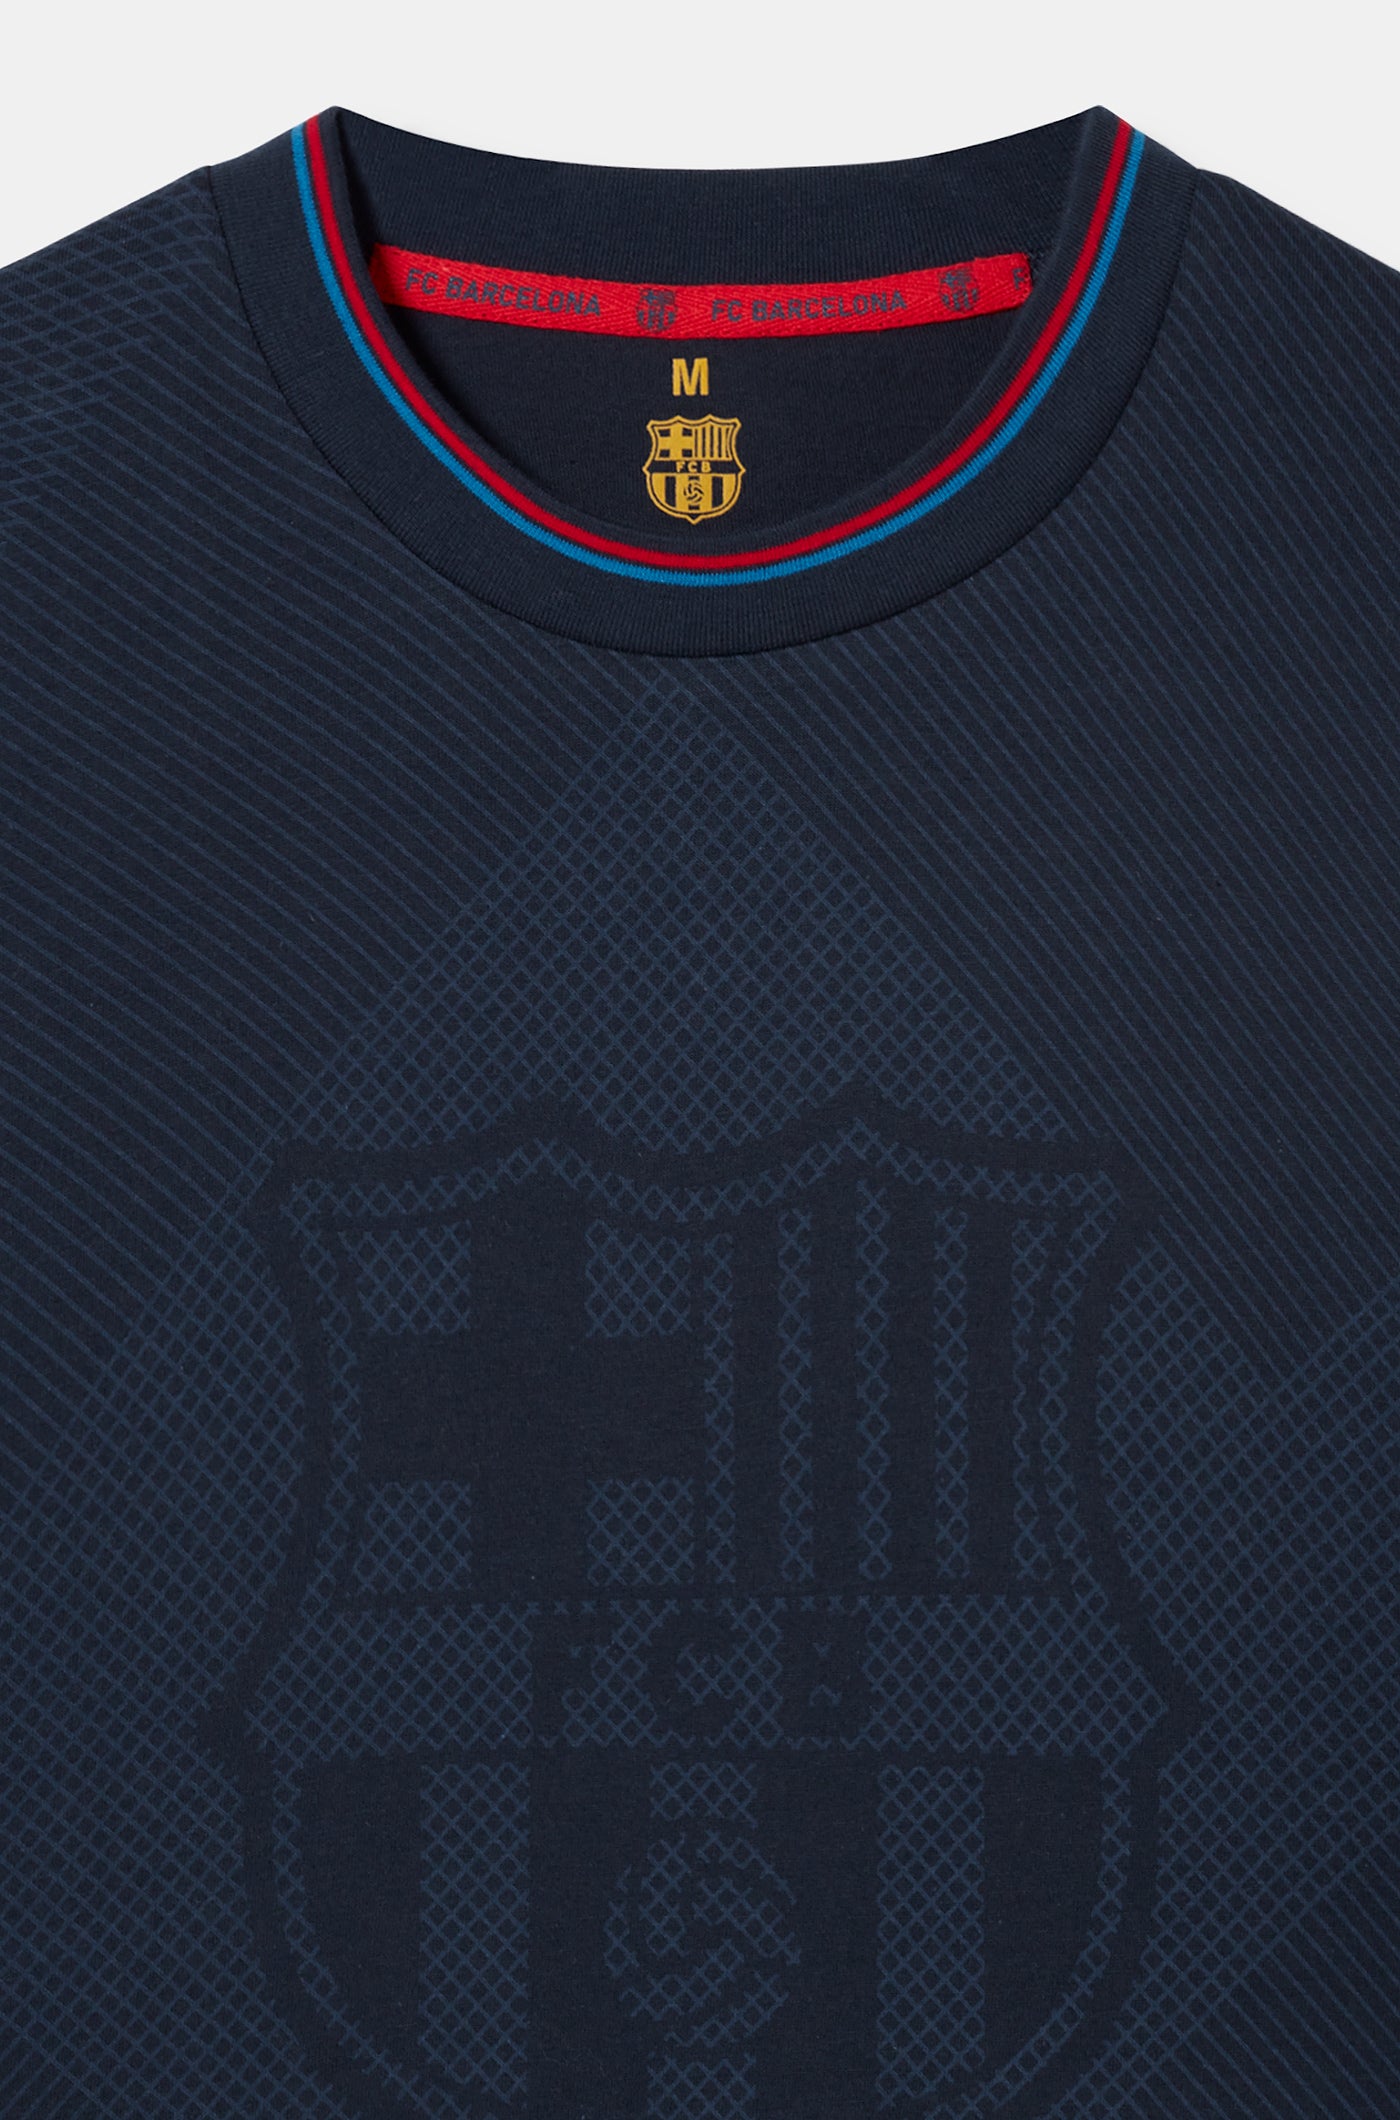 FC Barcelona-Pyjama mit marineblauem Wappen